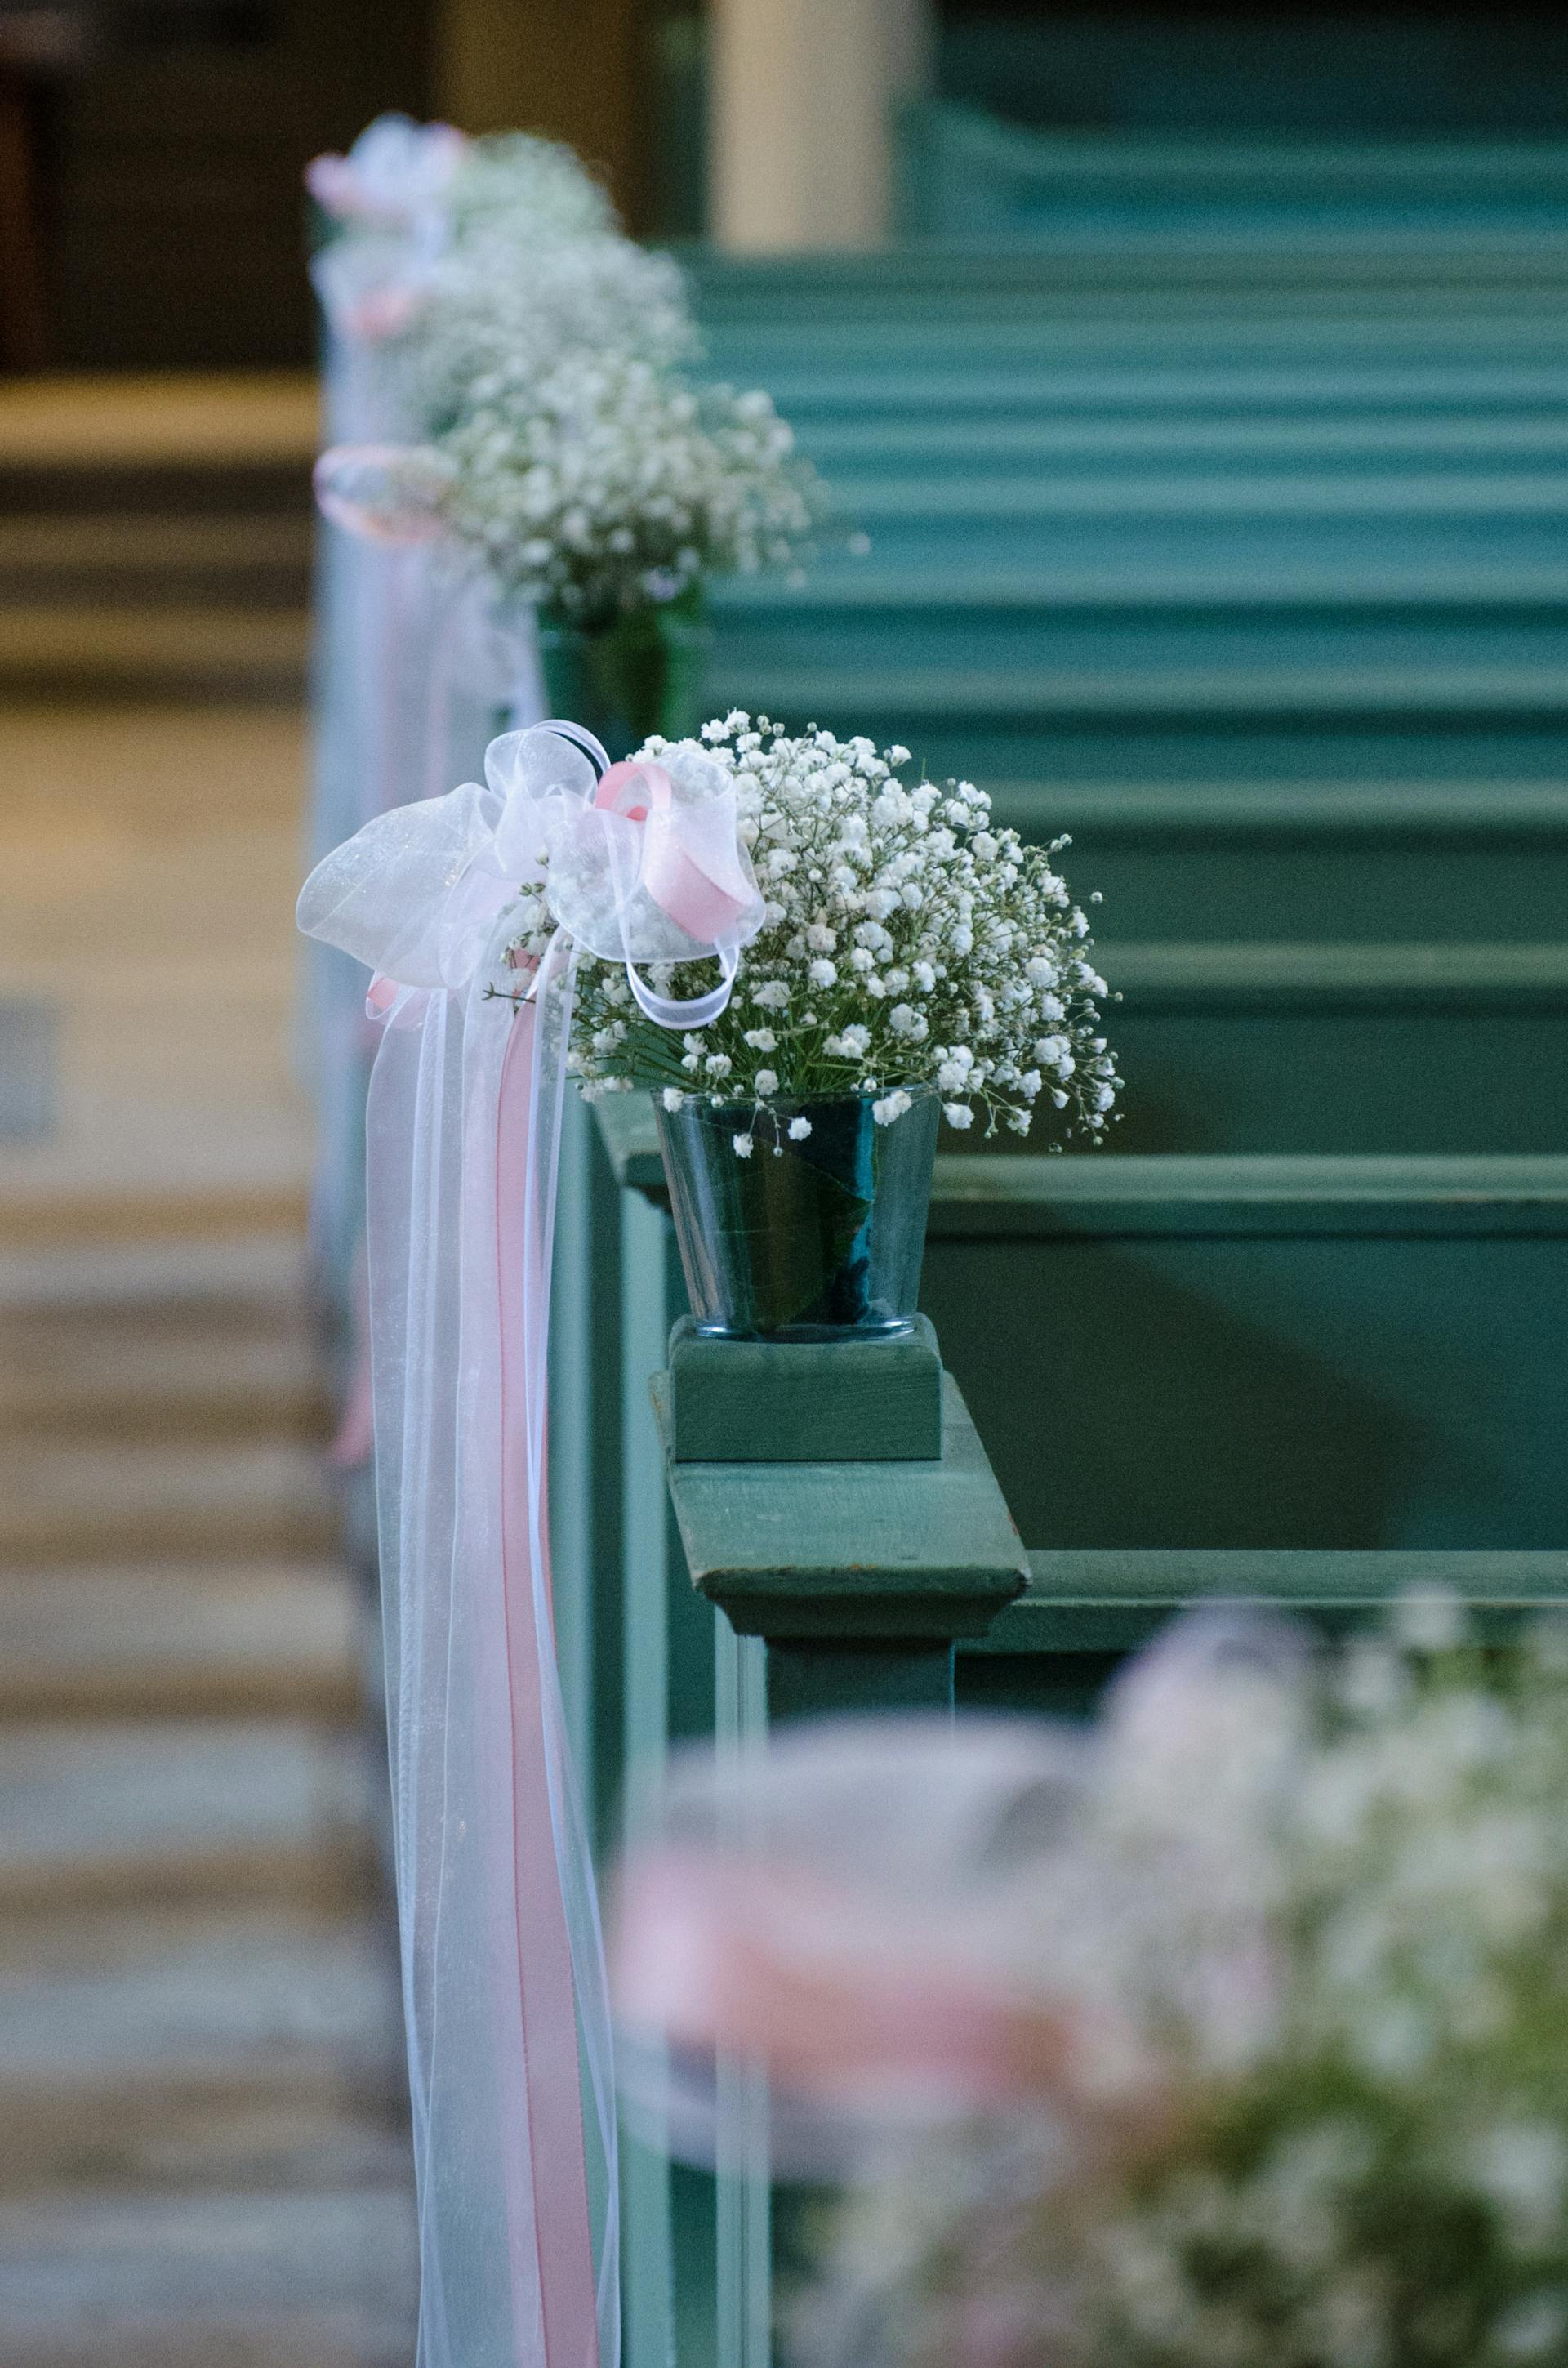 Bancos de iglesia con flores | Foto: Pexels